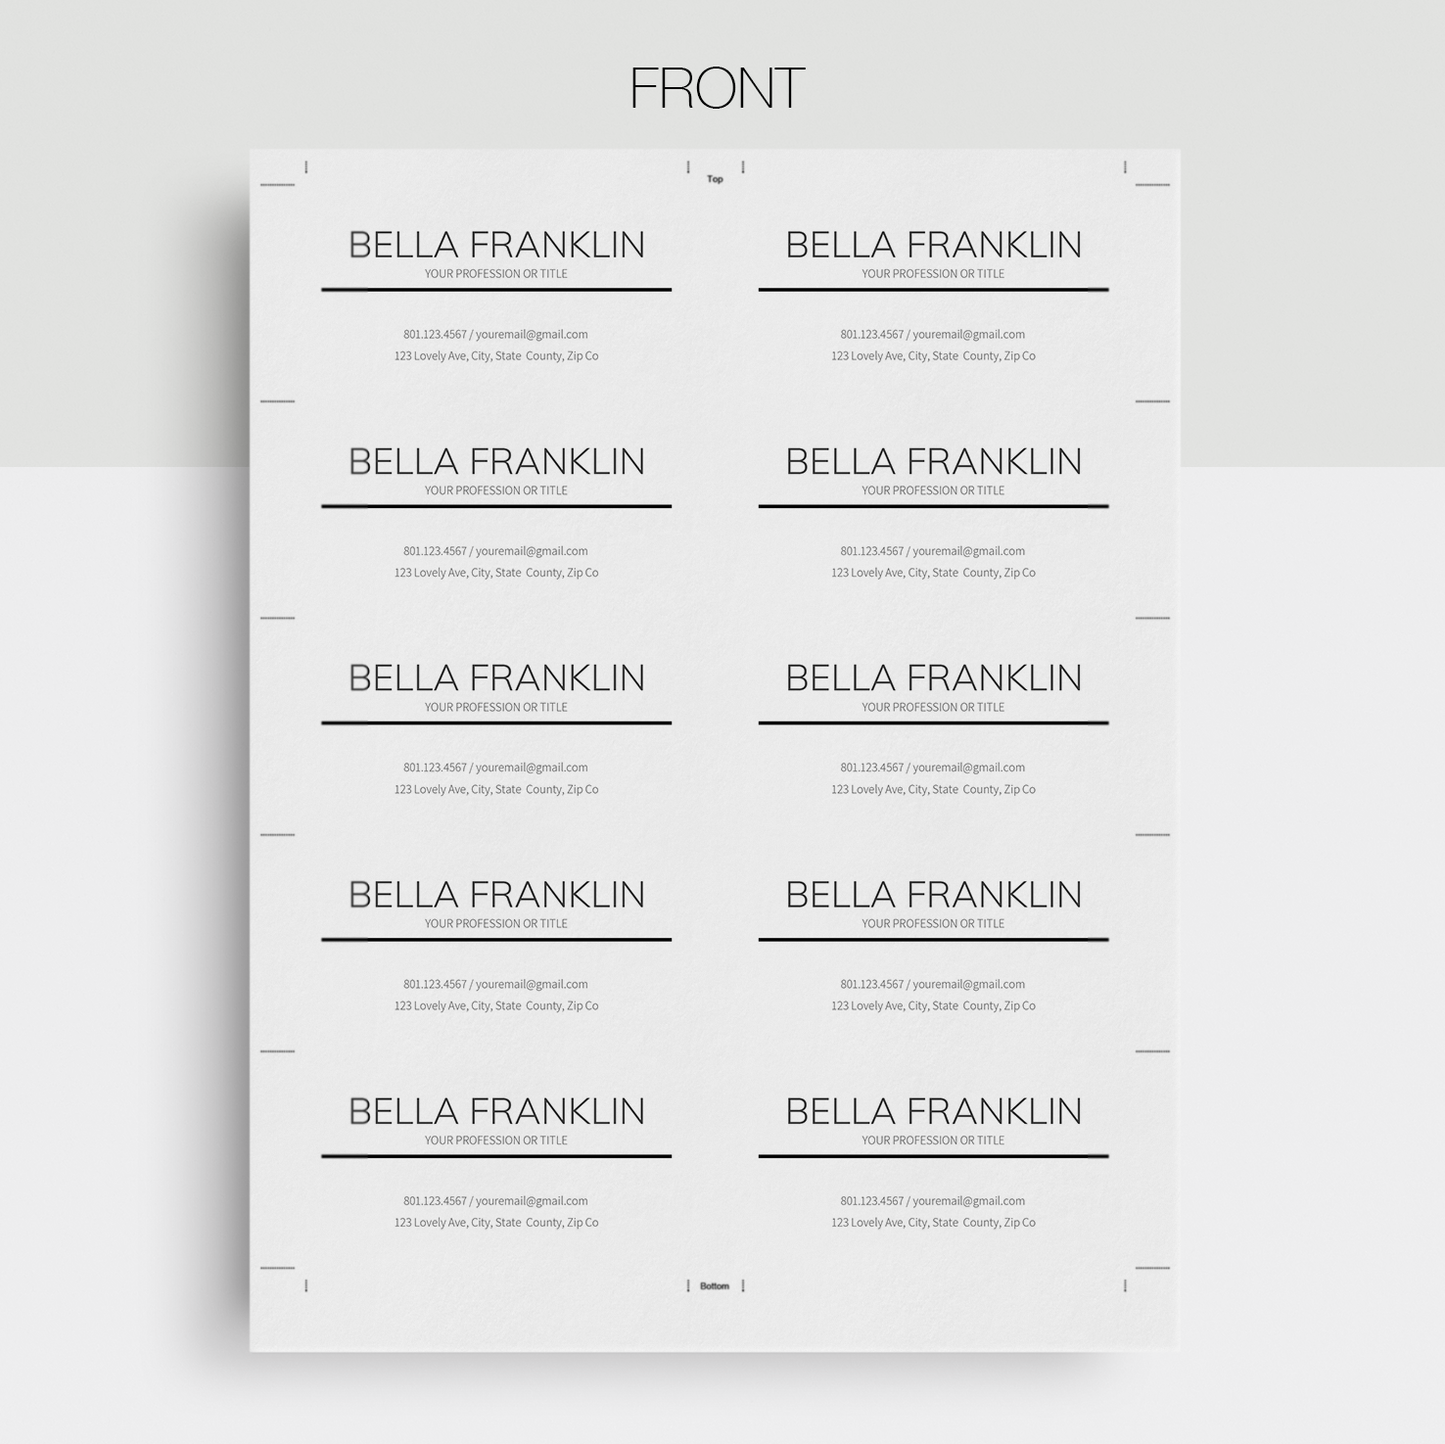 Bella Franklin | Google Docs Professional Business Cards Template - MioDocs